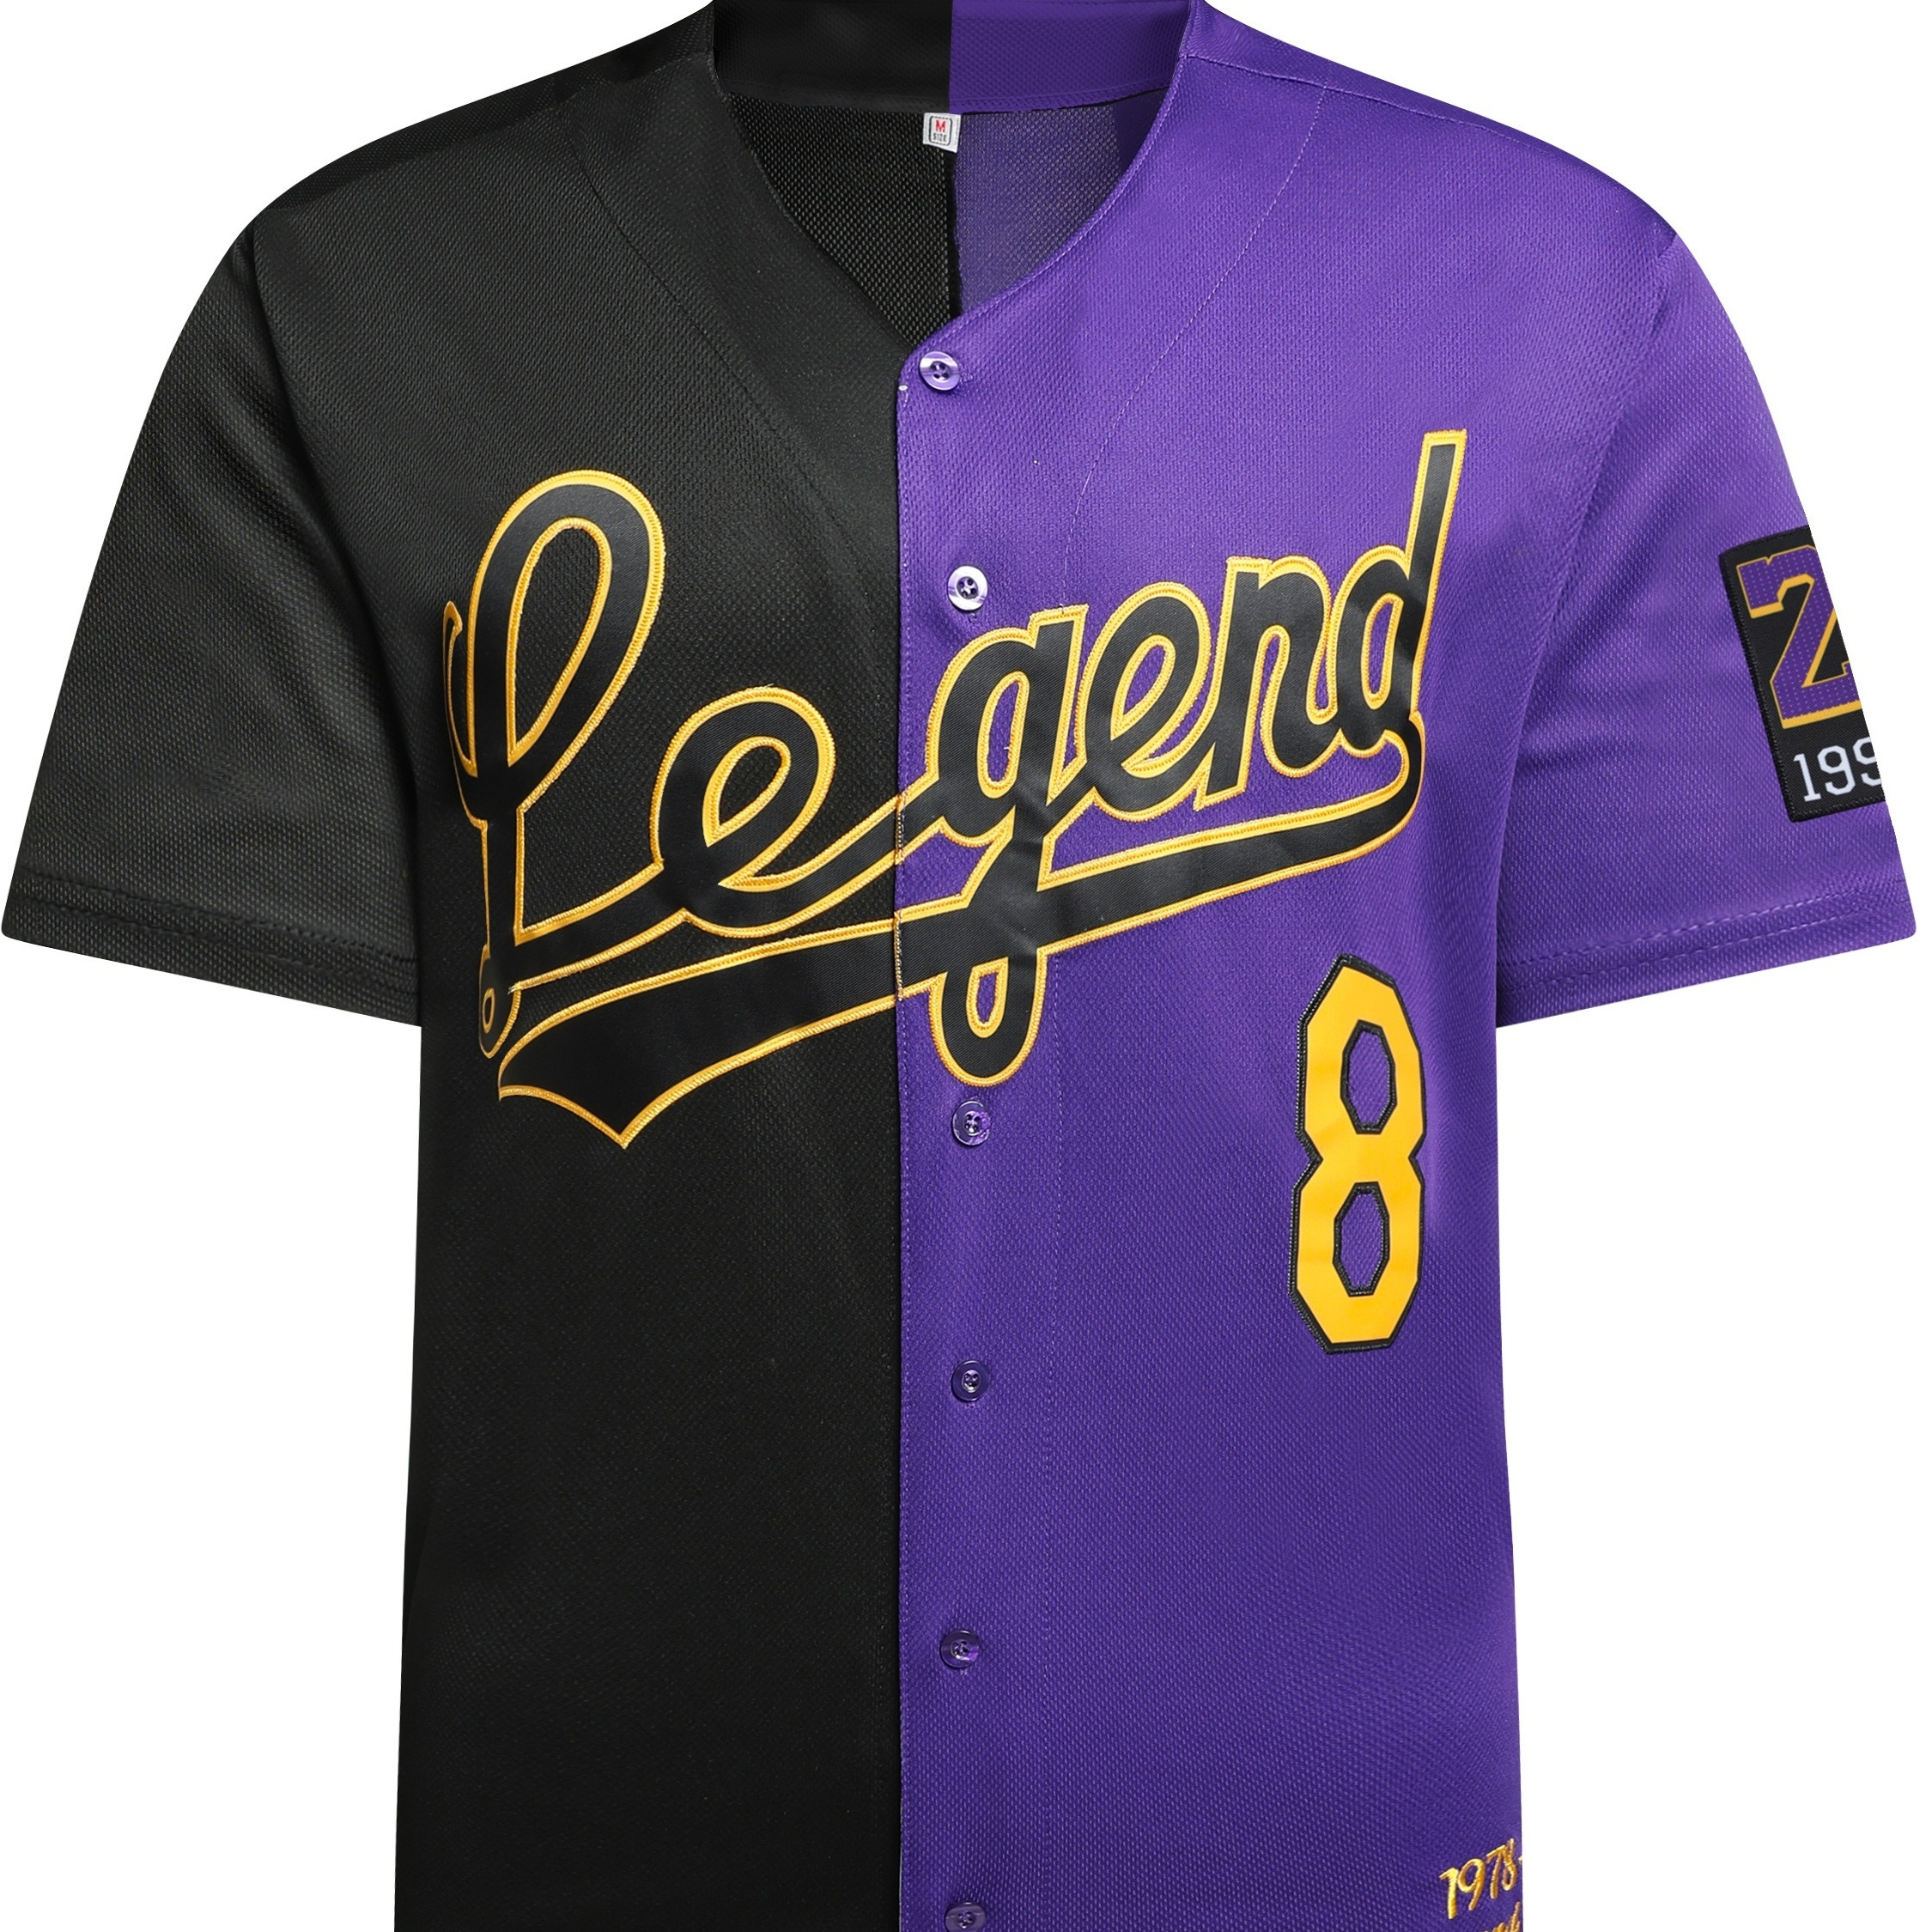 Men's #8 24 Embroidery Baseball Jersey, Retro Legend Black & Purple Button Up Short Sleeve Baseball Shirt for Training Competition Sports Uniform